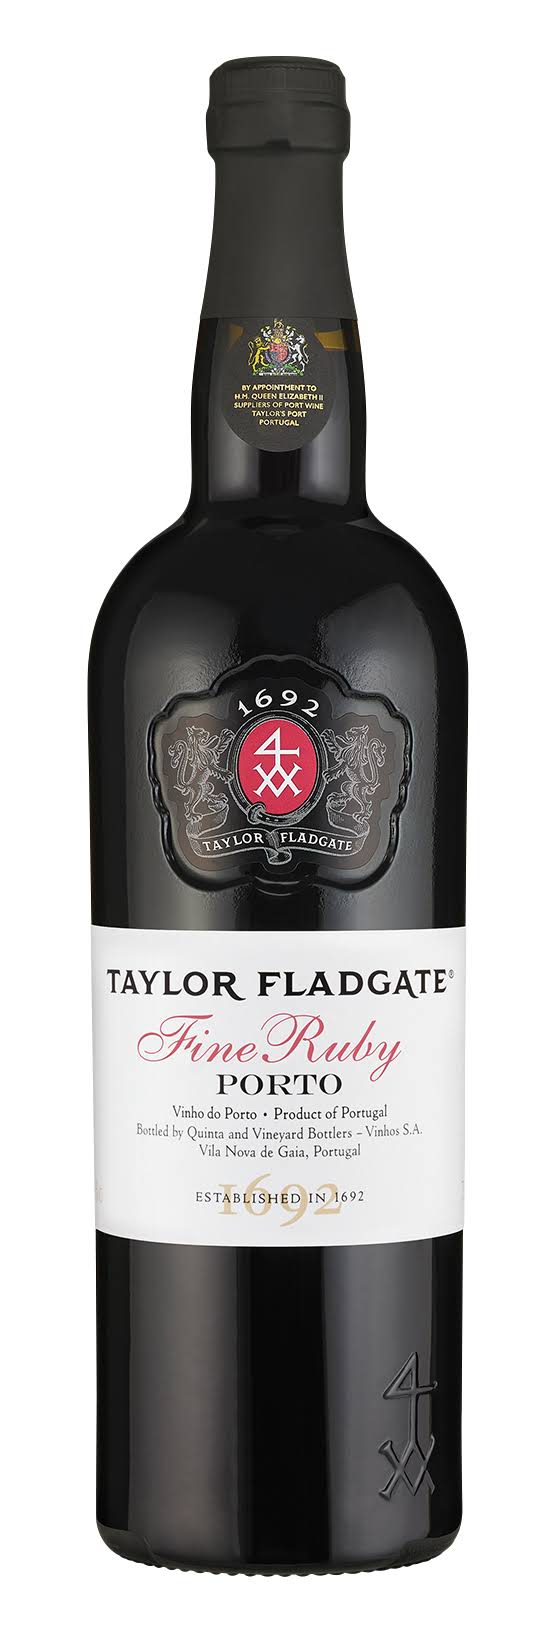 Taylor Fladgate Fine Ruby Porto, Portugal - 750 ml bottle